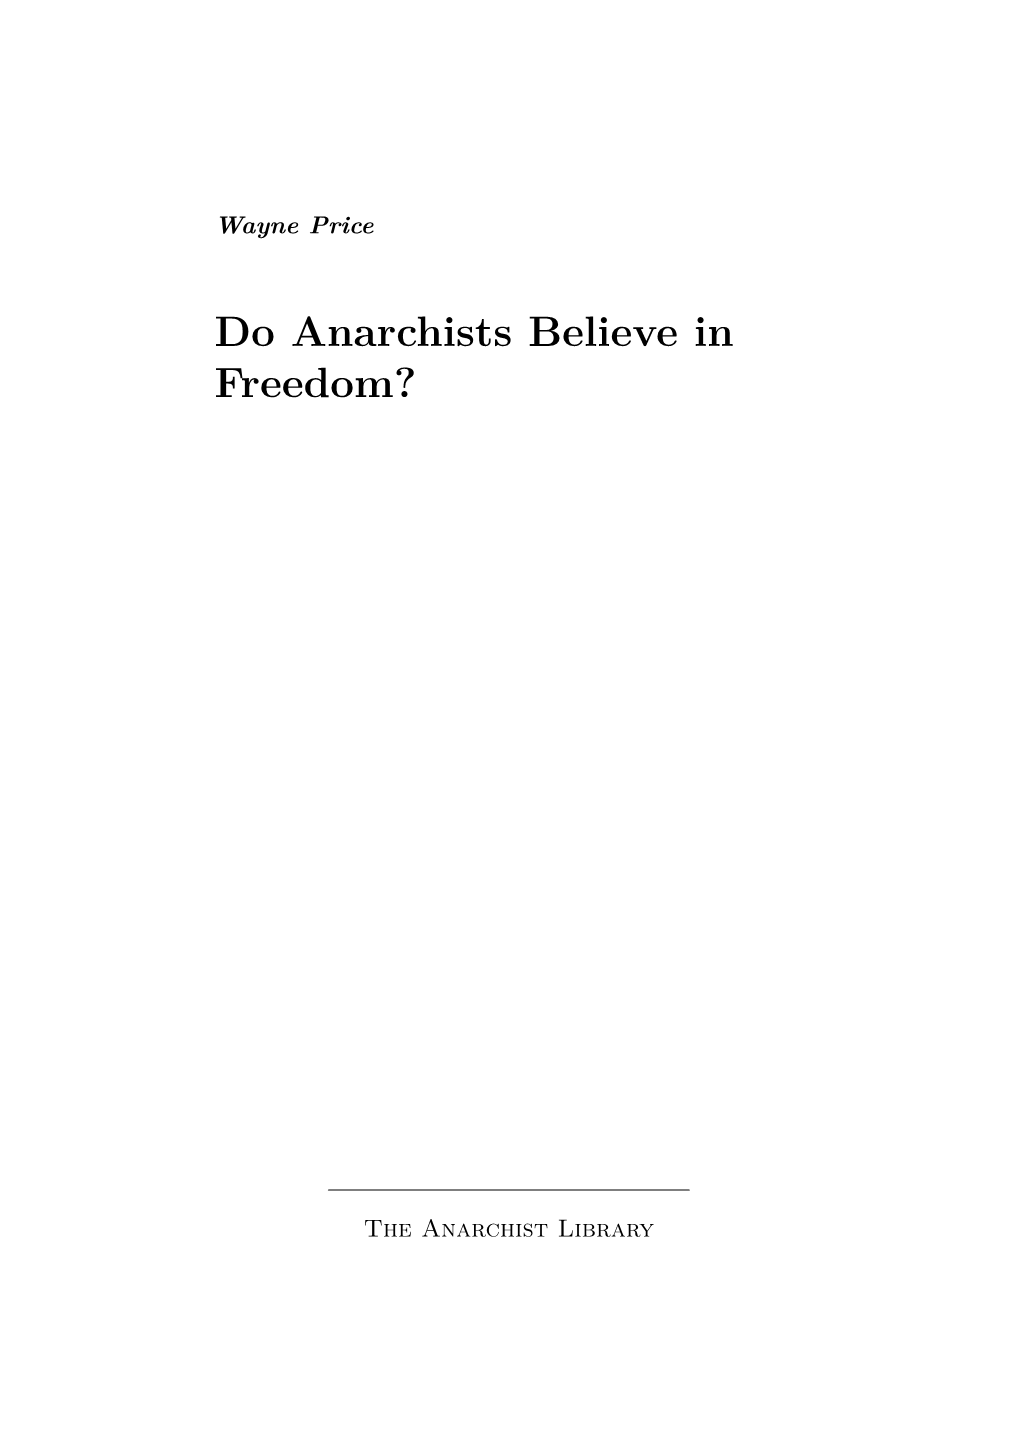 Do Anarchists Believe in Freedom?